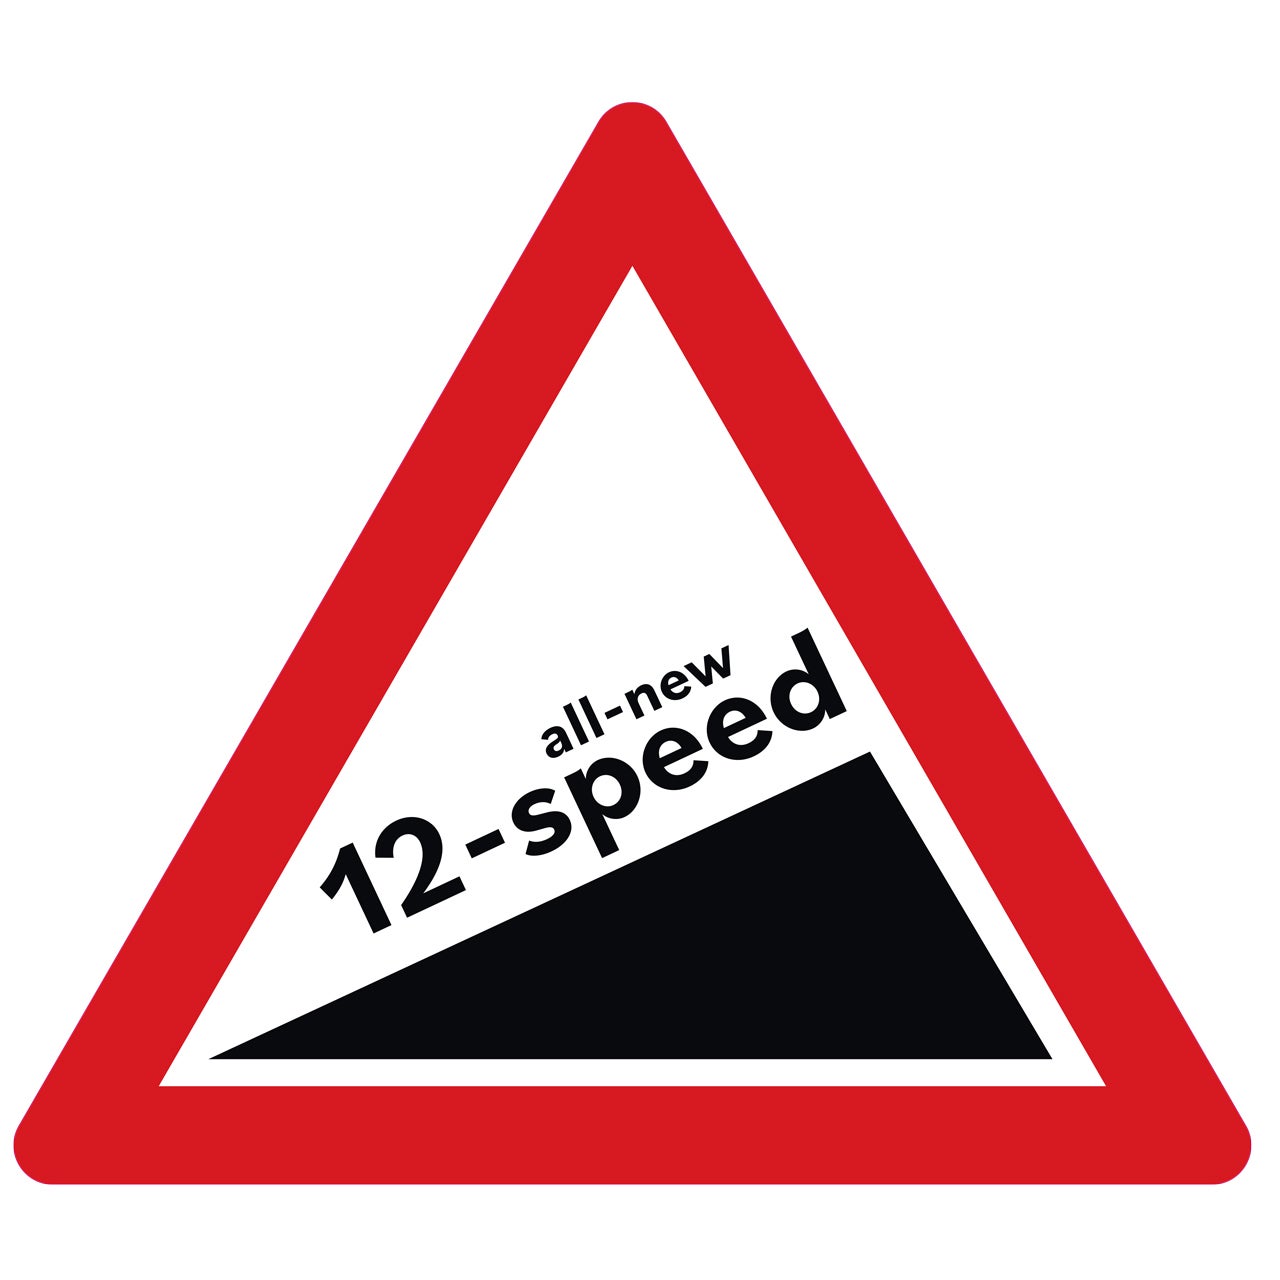 12 speed sign